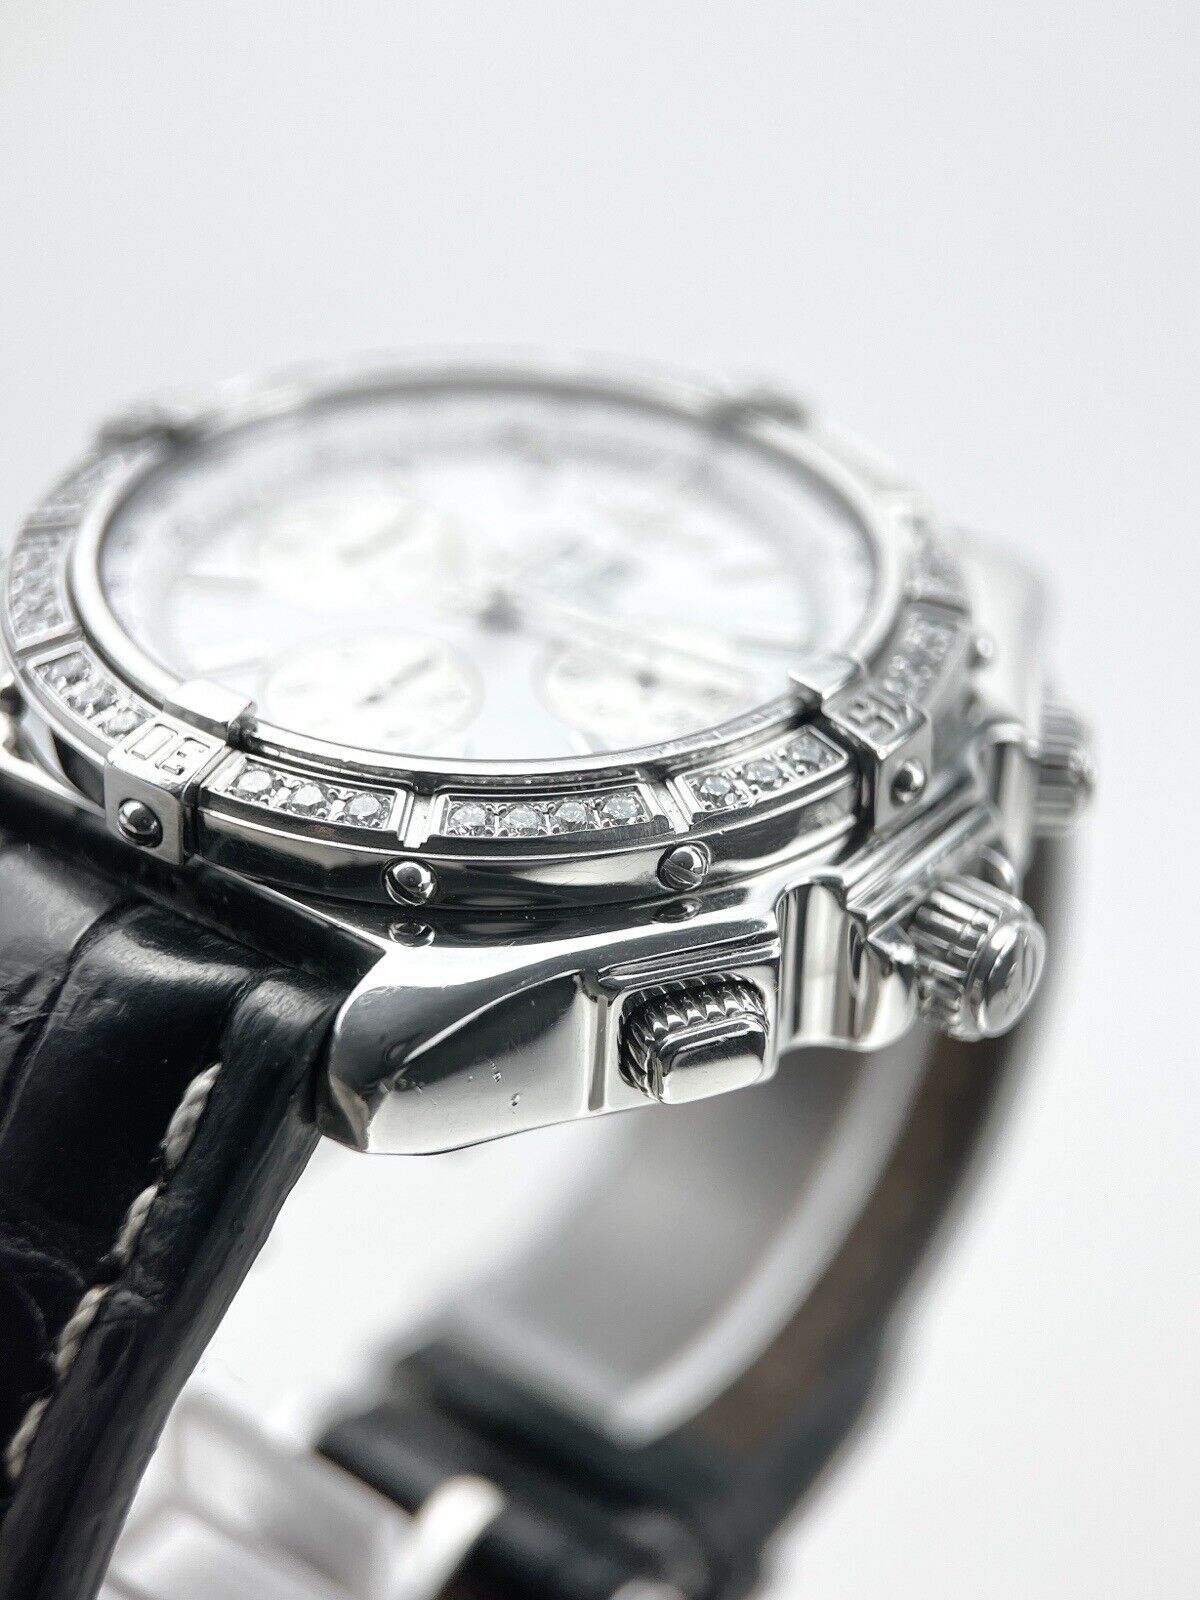 Breitling Crosswind Special 44mm Automatic Watch A44355 w/ Diamond Bezel